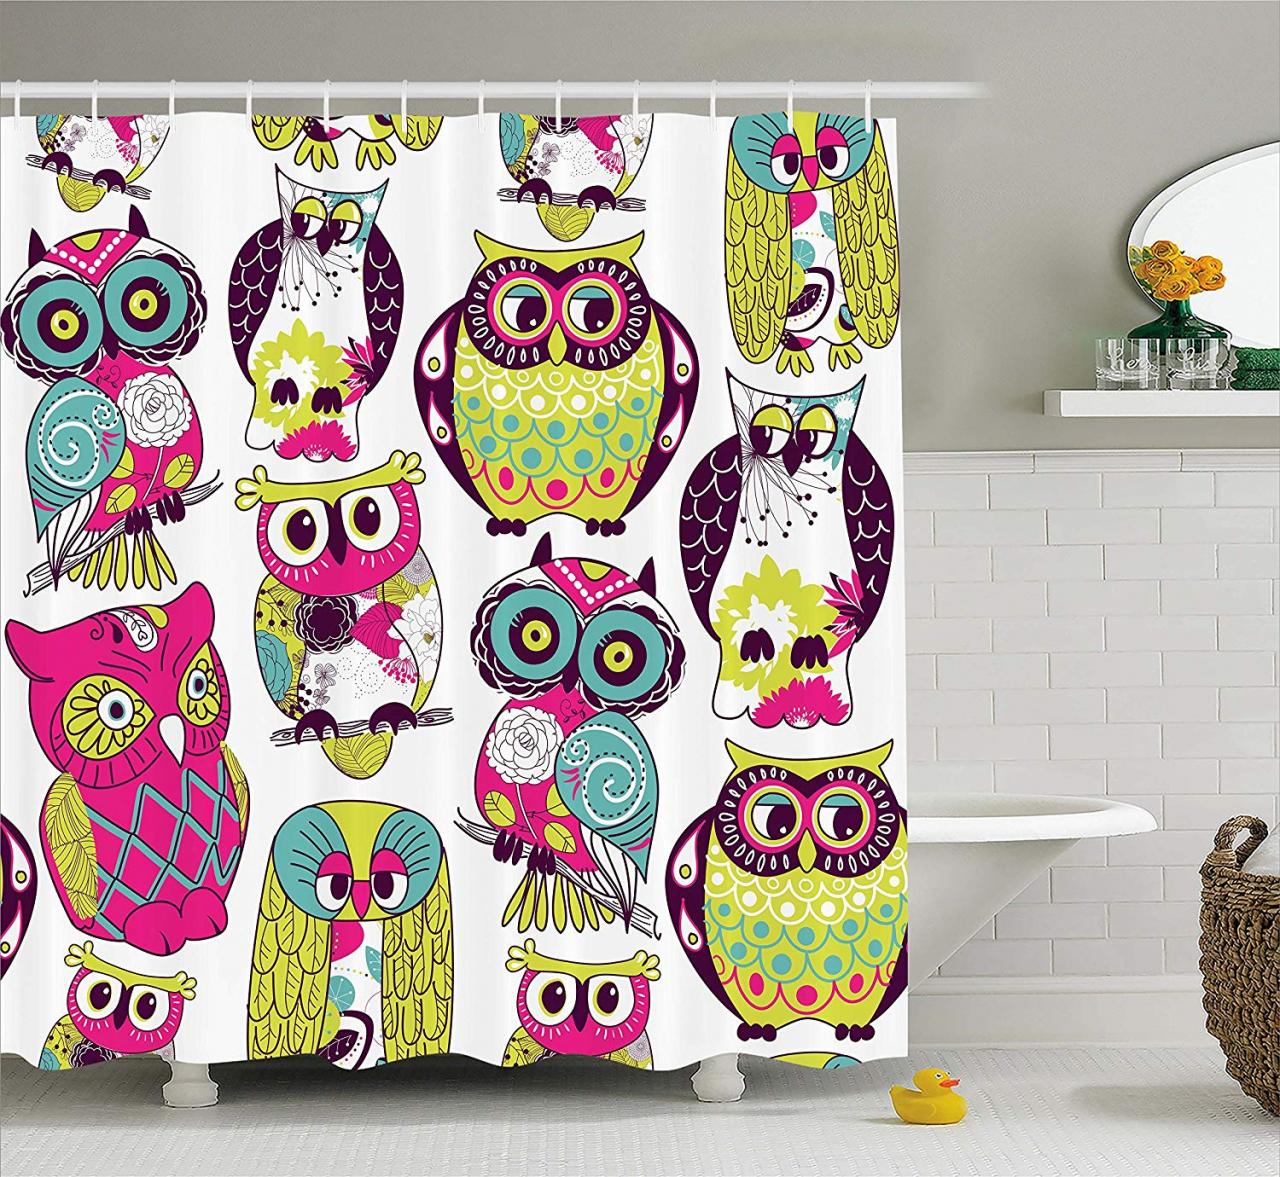 Kids Bathroom Shower Curtain Owl Decor Owls Eyes with Funny Cute Best